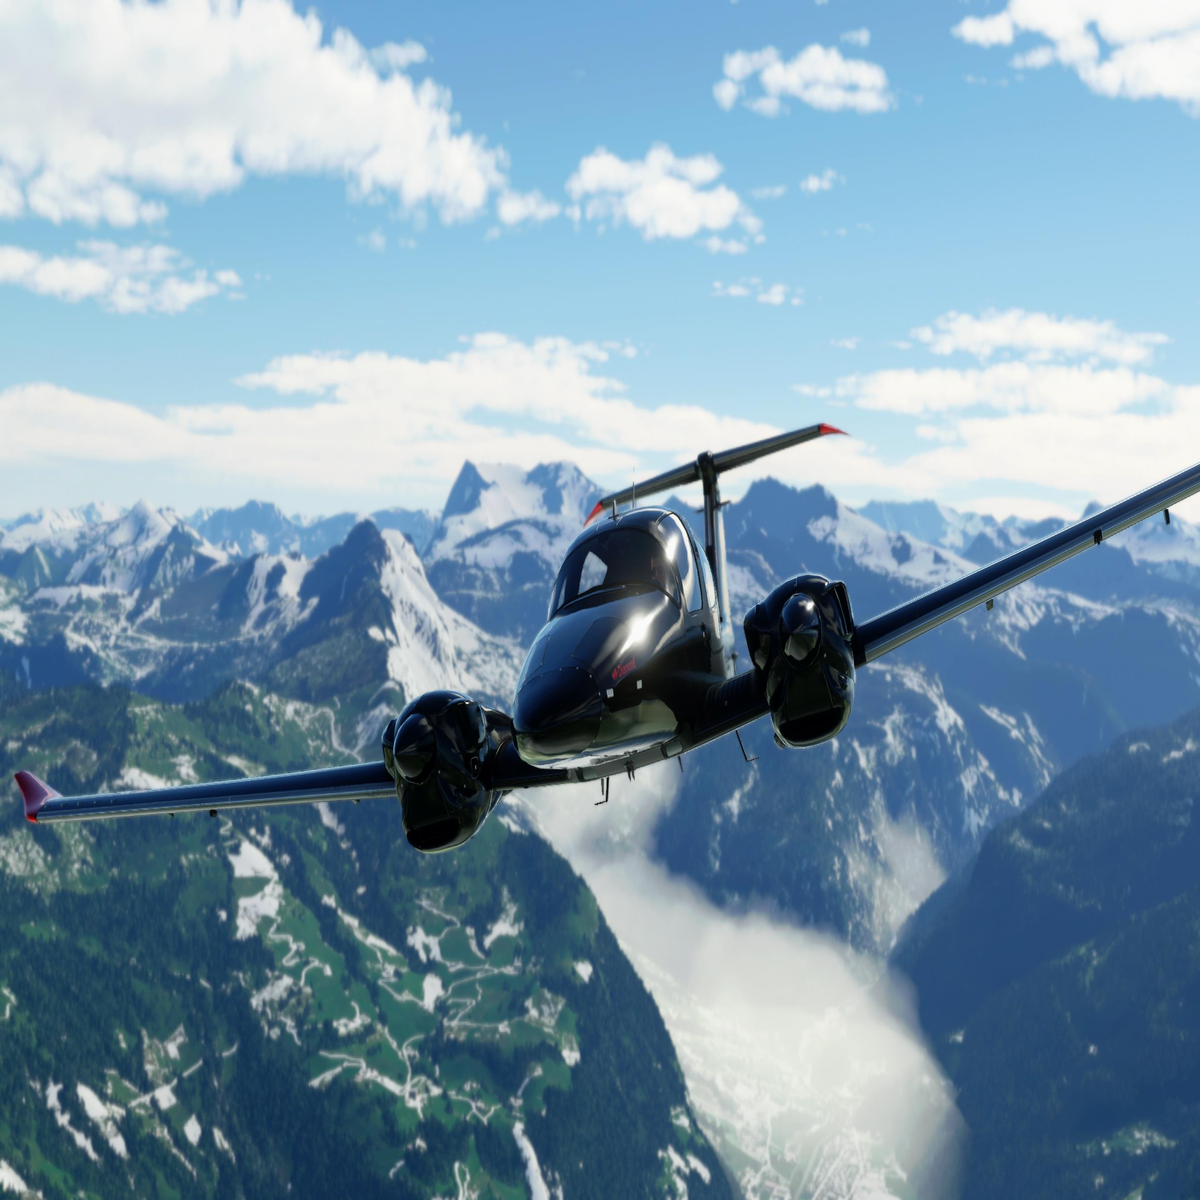 Microsoft Flight Simulator X Demo : Microsoft Game Studios : Free